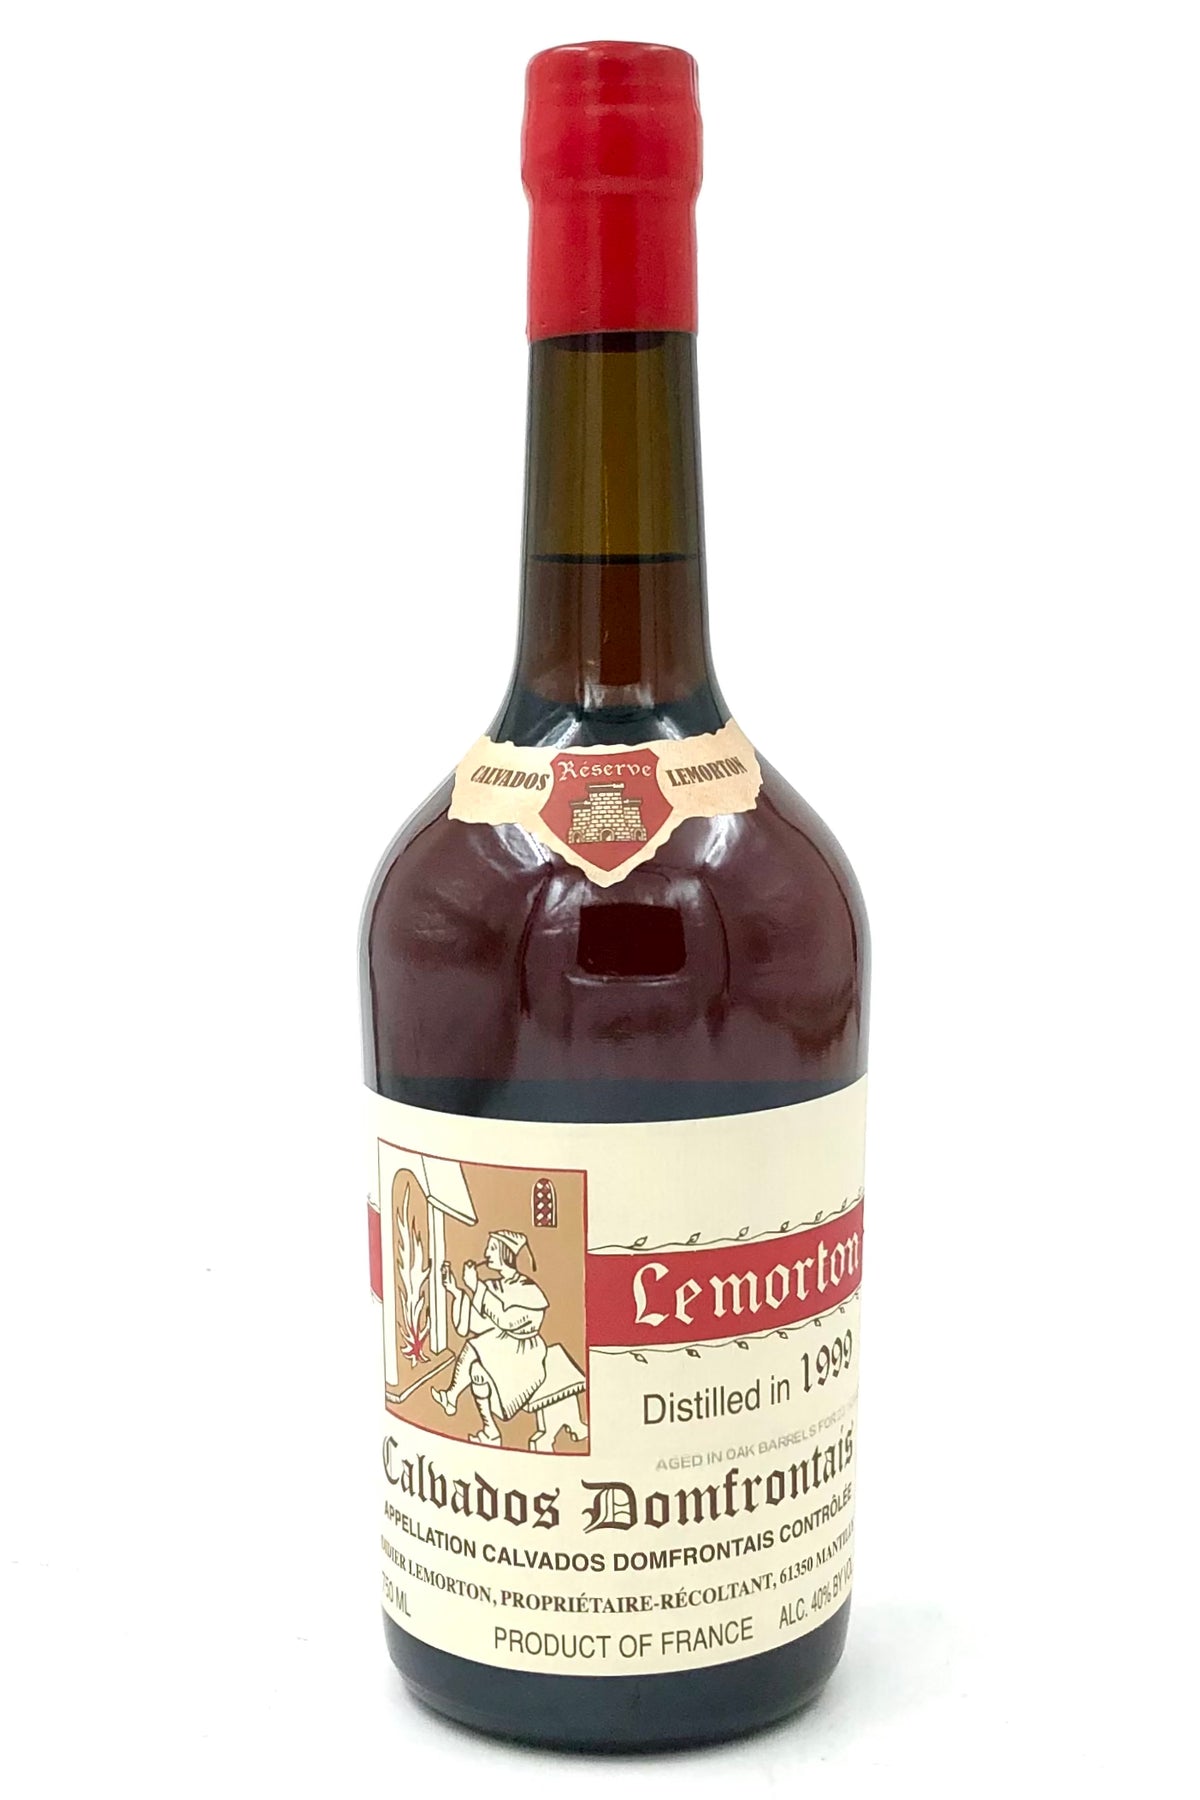 Lemorton 1999 Vintage Calvados